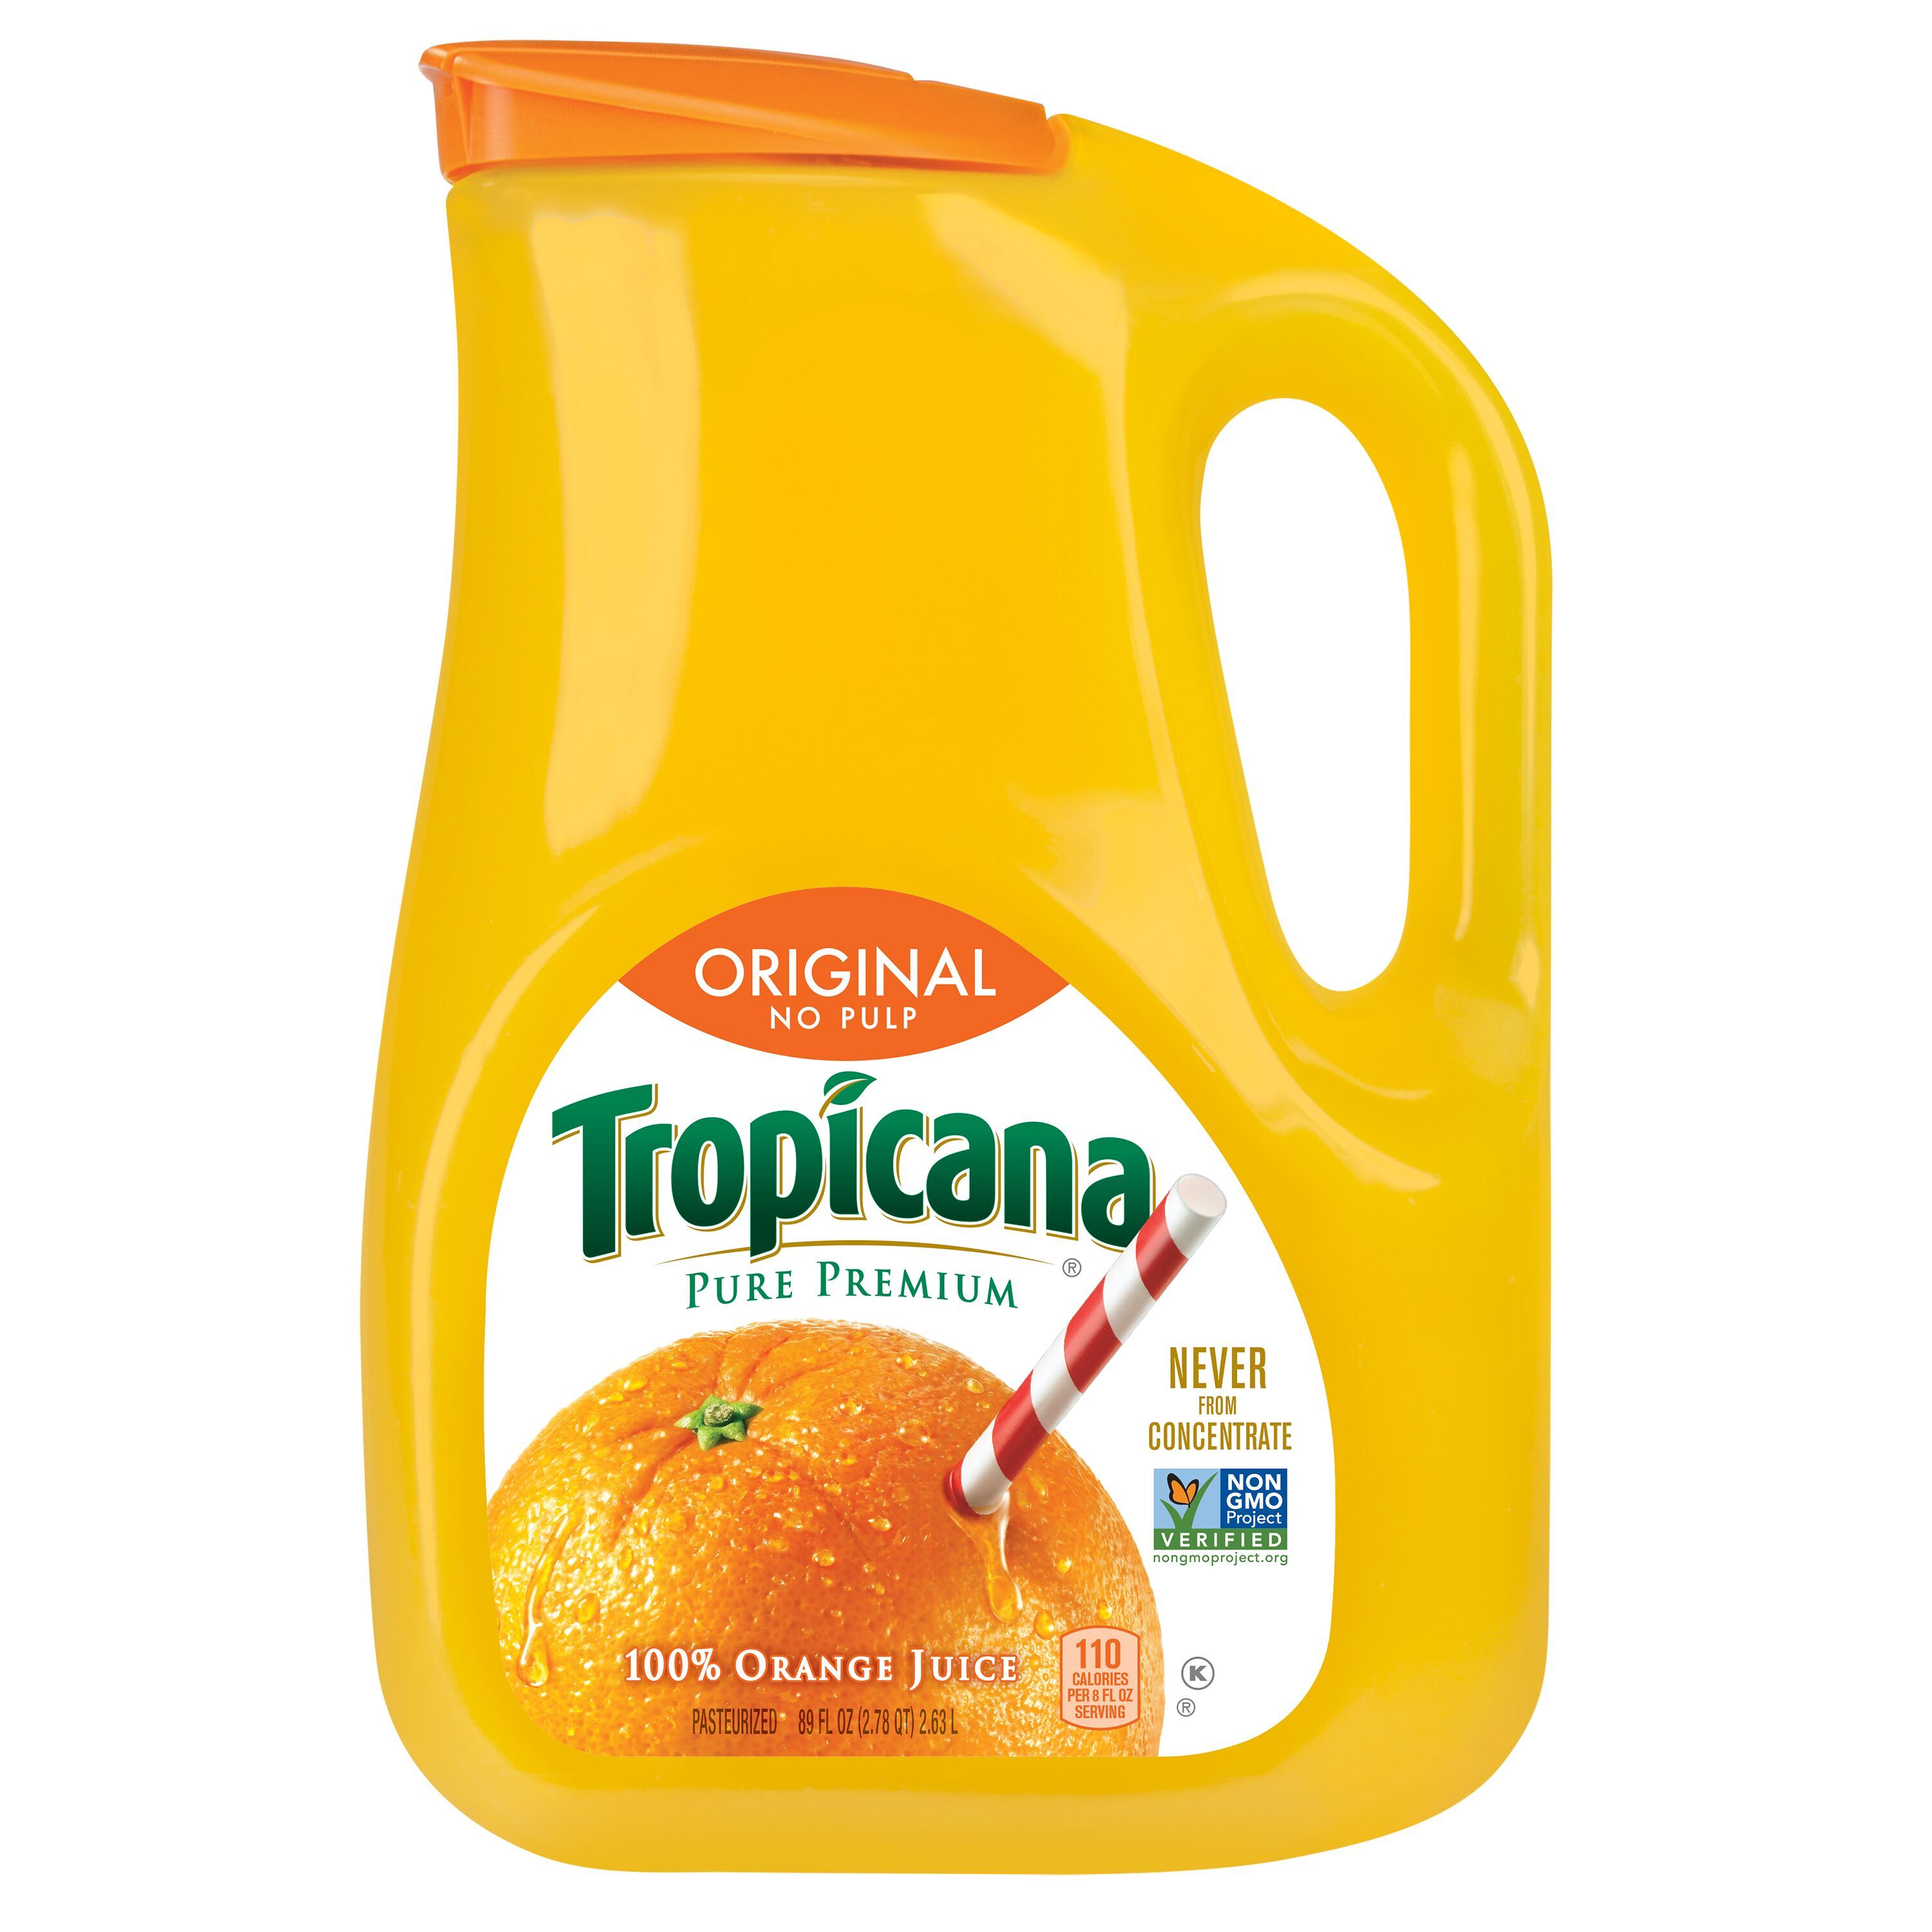 Tropicana Pure Premium Original No Pulp 100% Orange Juice 89 fl. oz. Jug - image 1 of 3